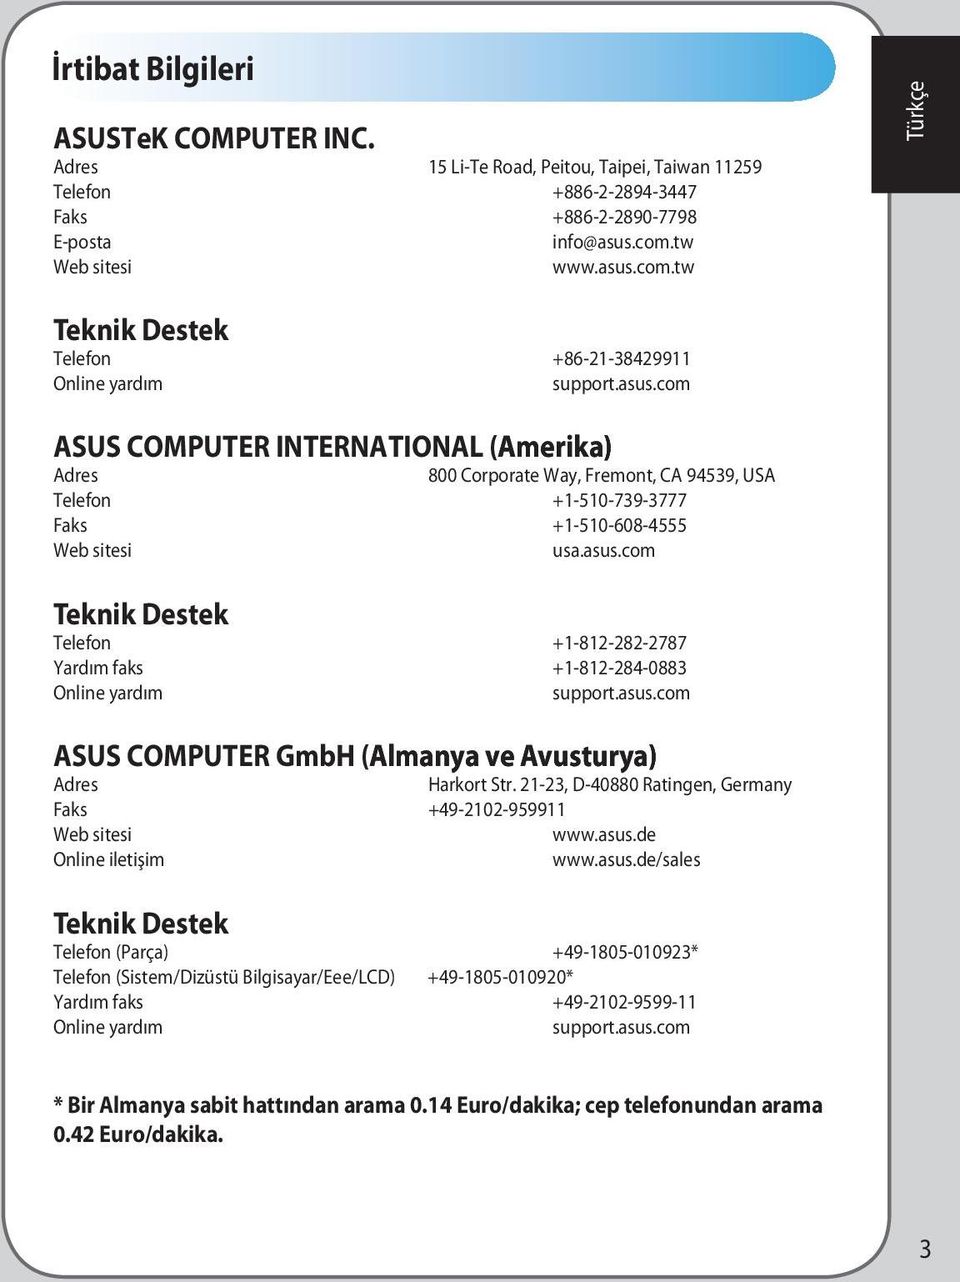 asus.com Teknik Destek Telefon +1-812-282-2787 Yardım faks +1-812-28-0883 Online yardım support.asus.com ASUS COMPUTER GmbH (Al an a Almanya ve e Avusturya ) A st r a Adres Harkort Str.